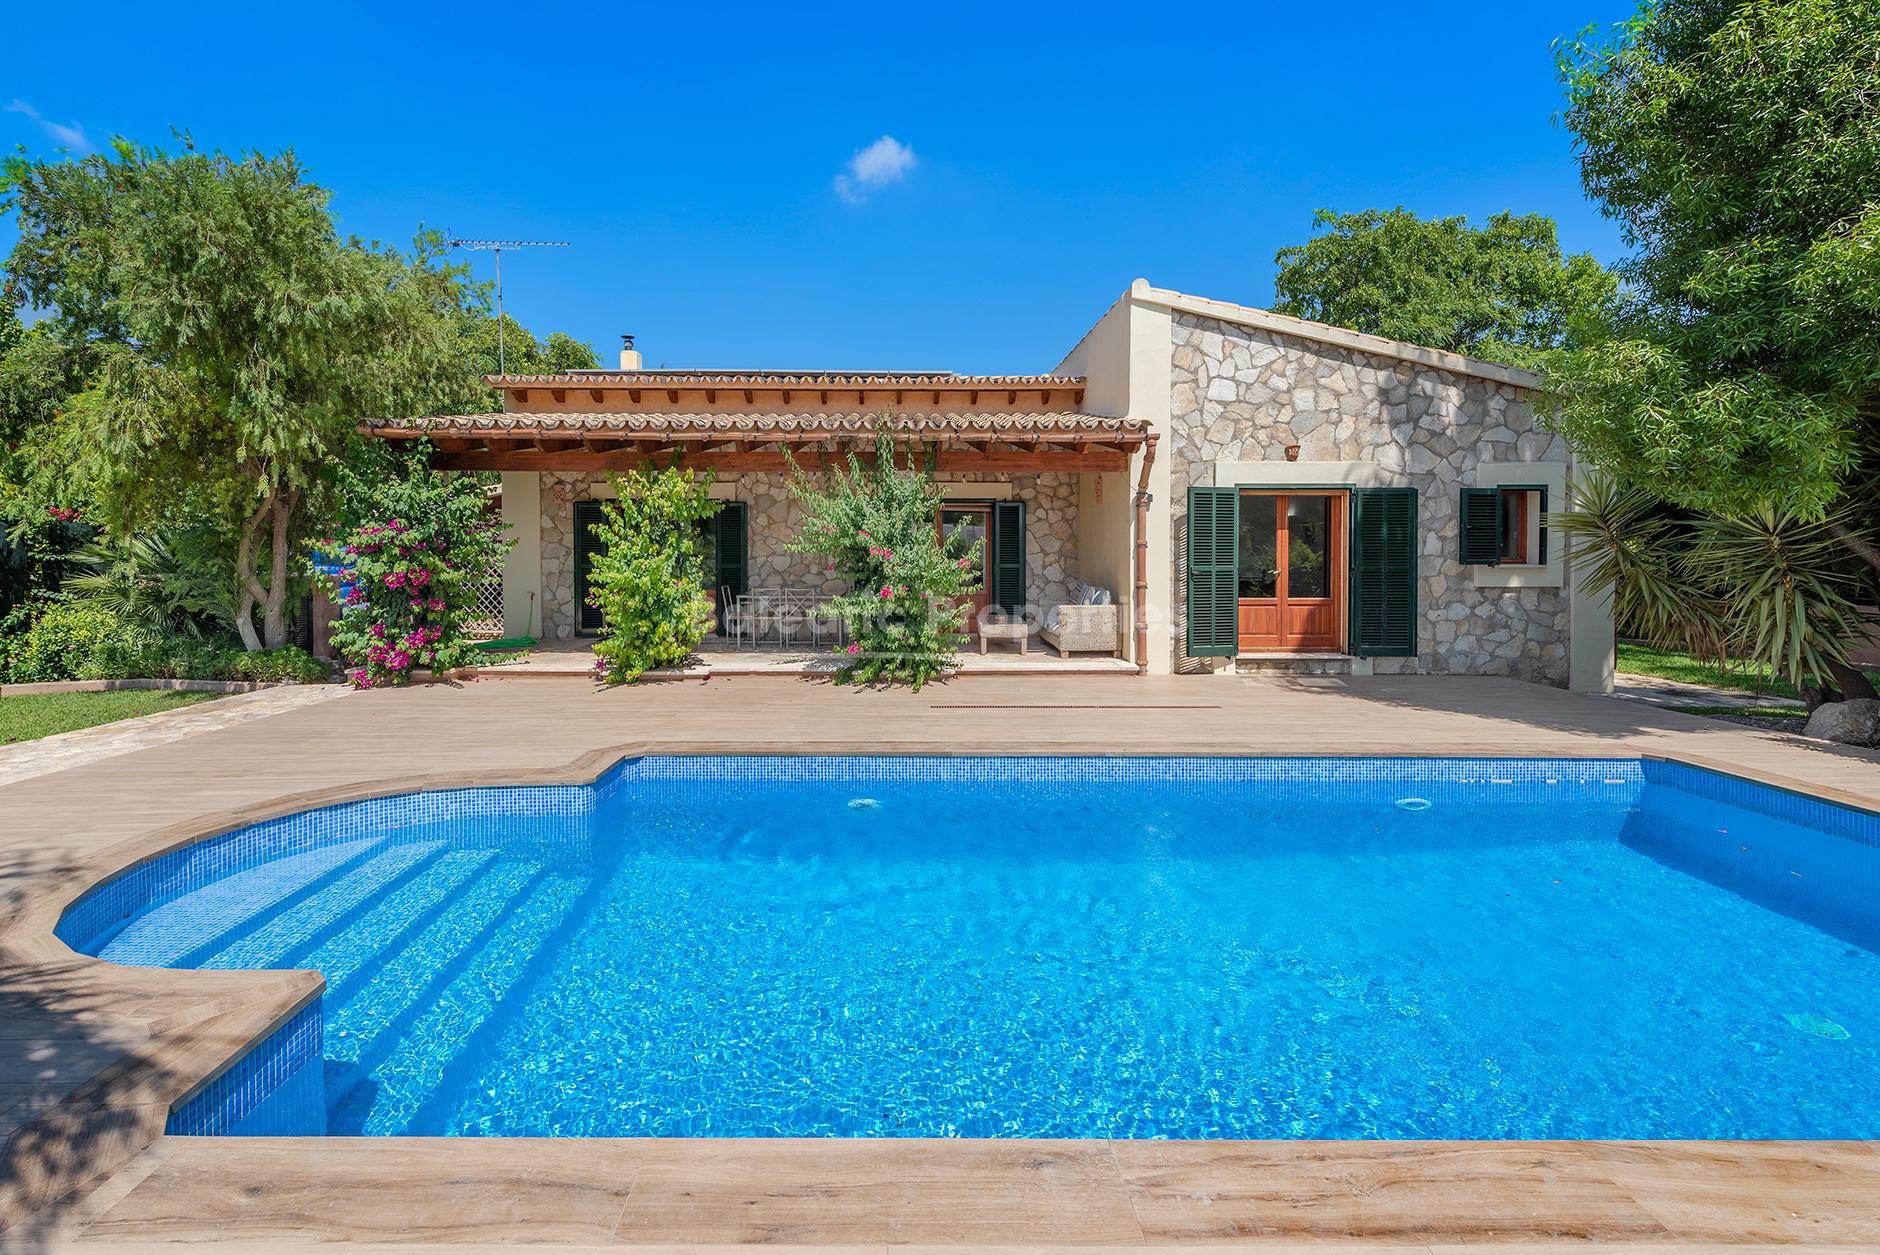 Family villa with attractive stone facade and pool for sale near Pollensa, Mallorca